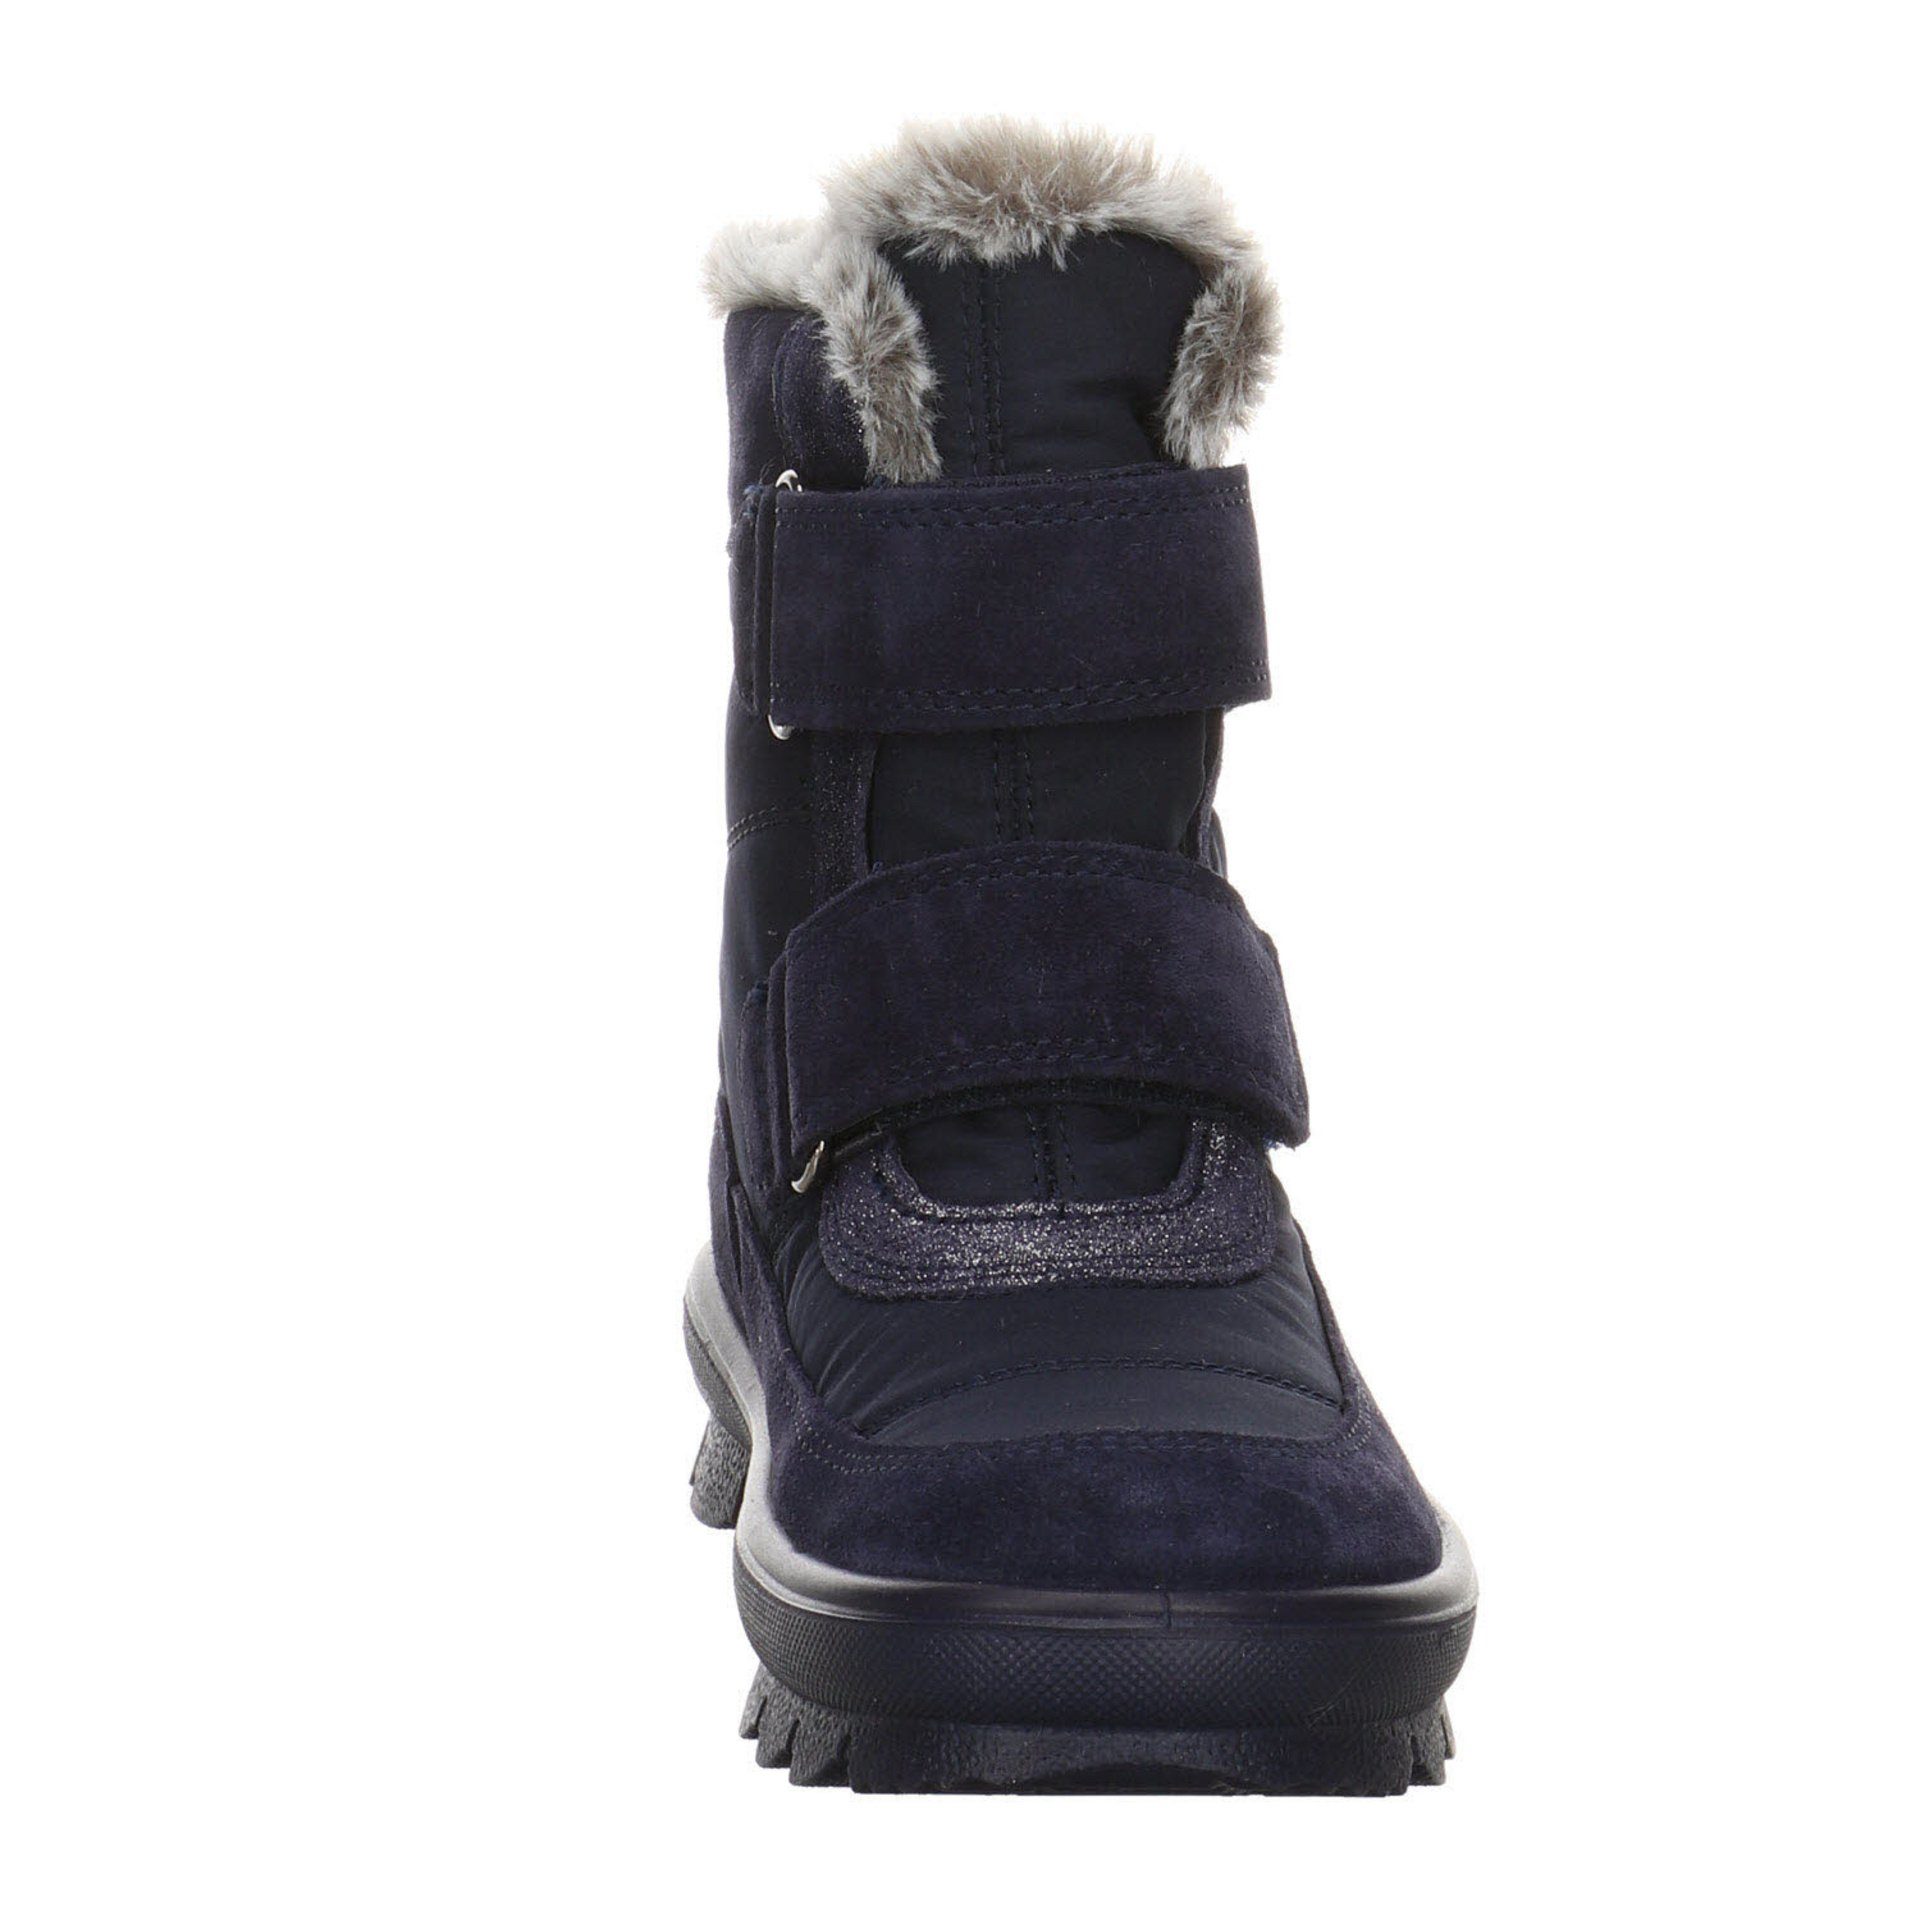 Superfit Boots Leder-/Textilkombination uni unbekannt Stiefel Leder-/Textilkombination